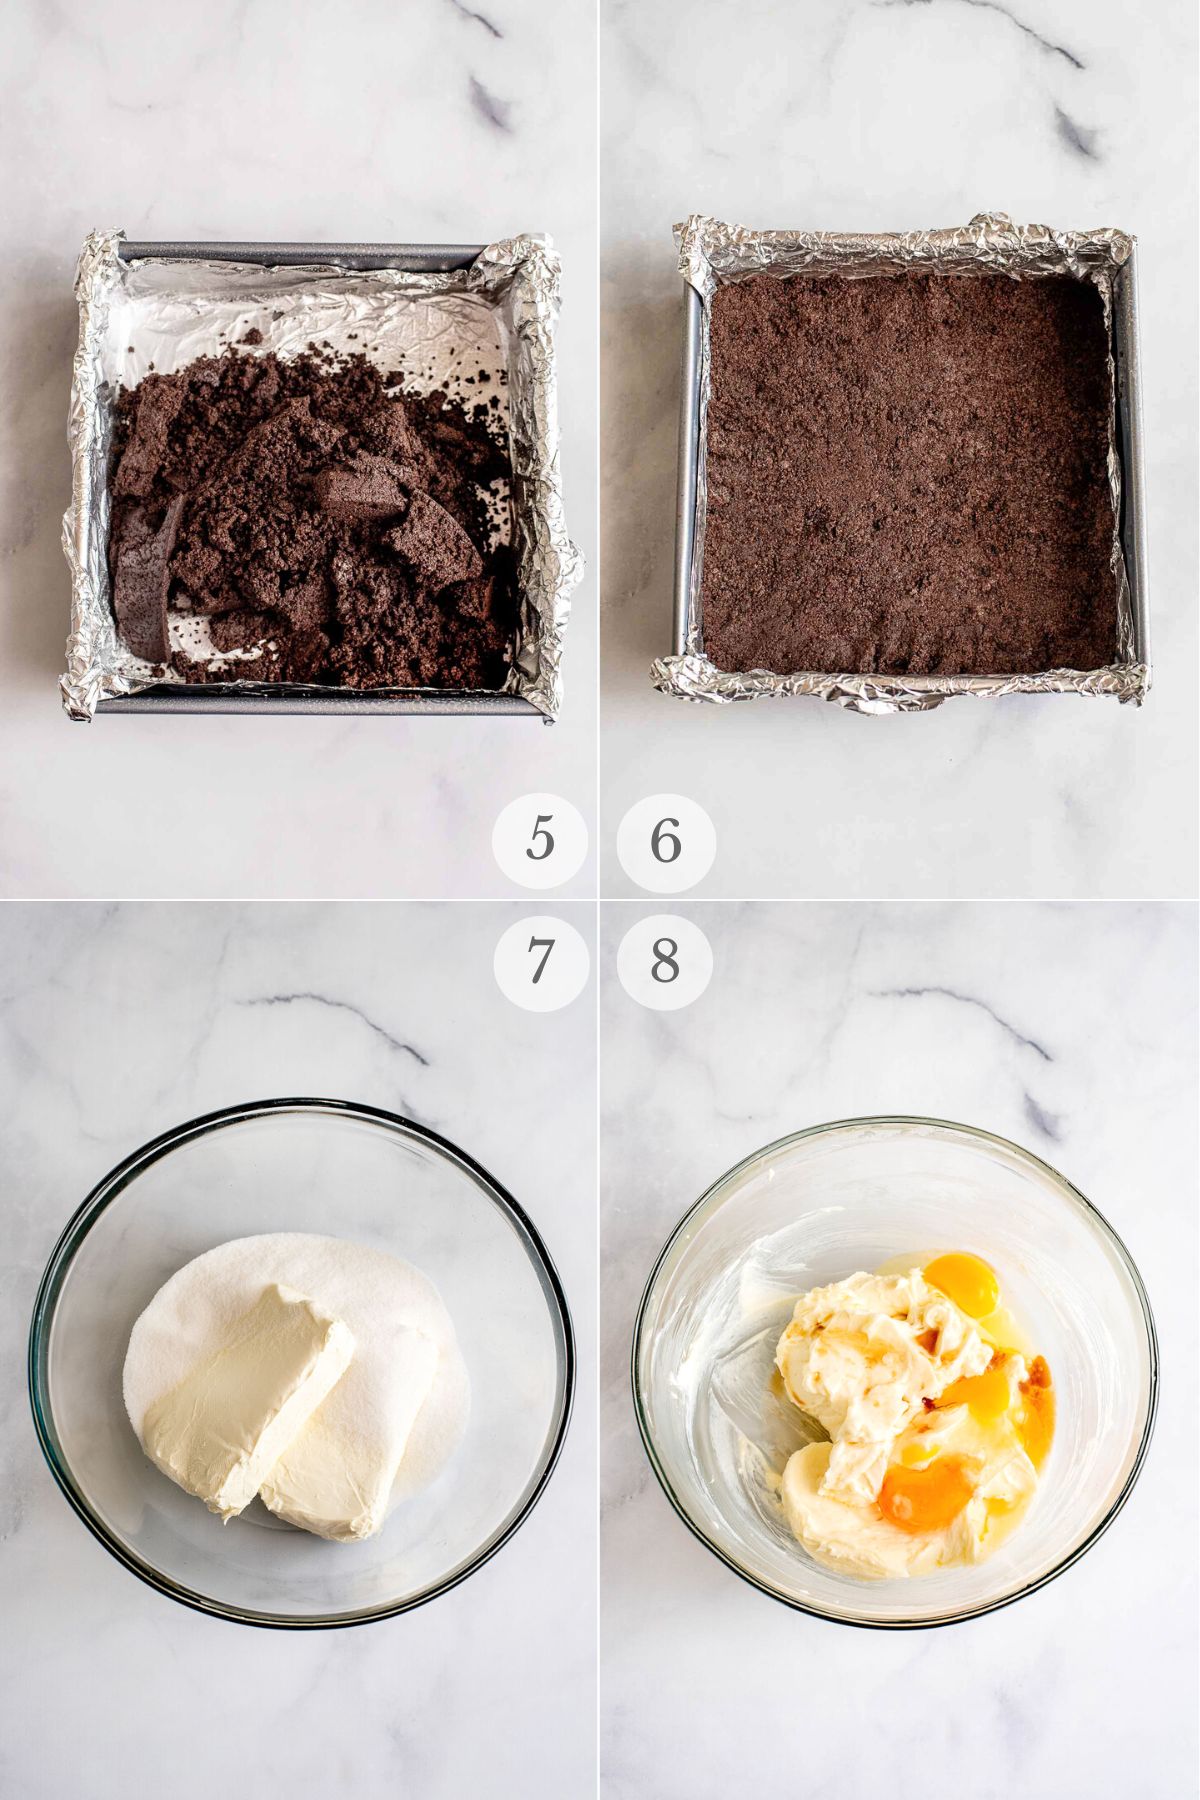 cheesecake bars recipe steps 5-8.